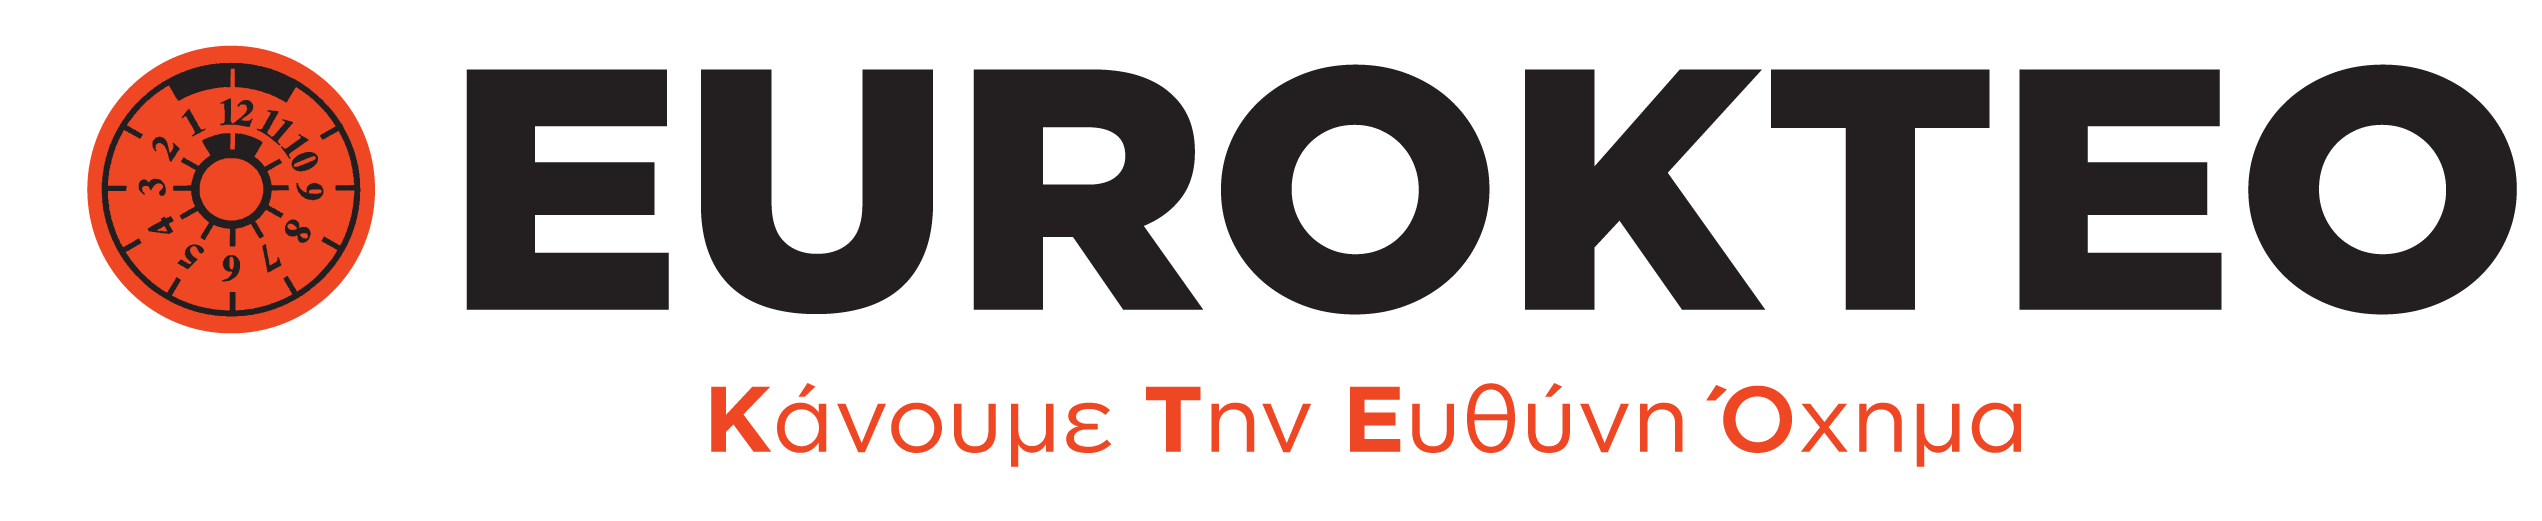 Eurokteo logo